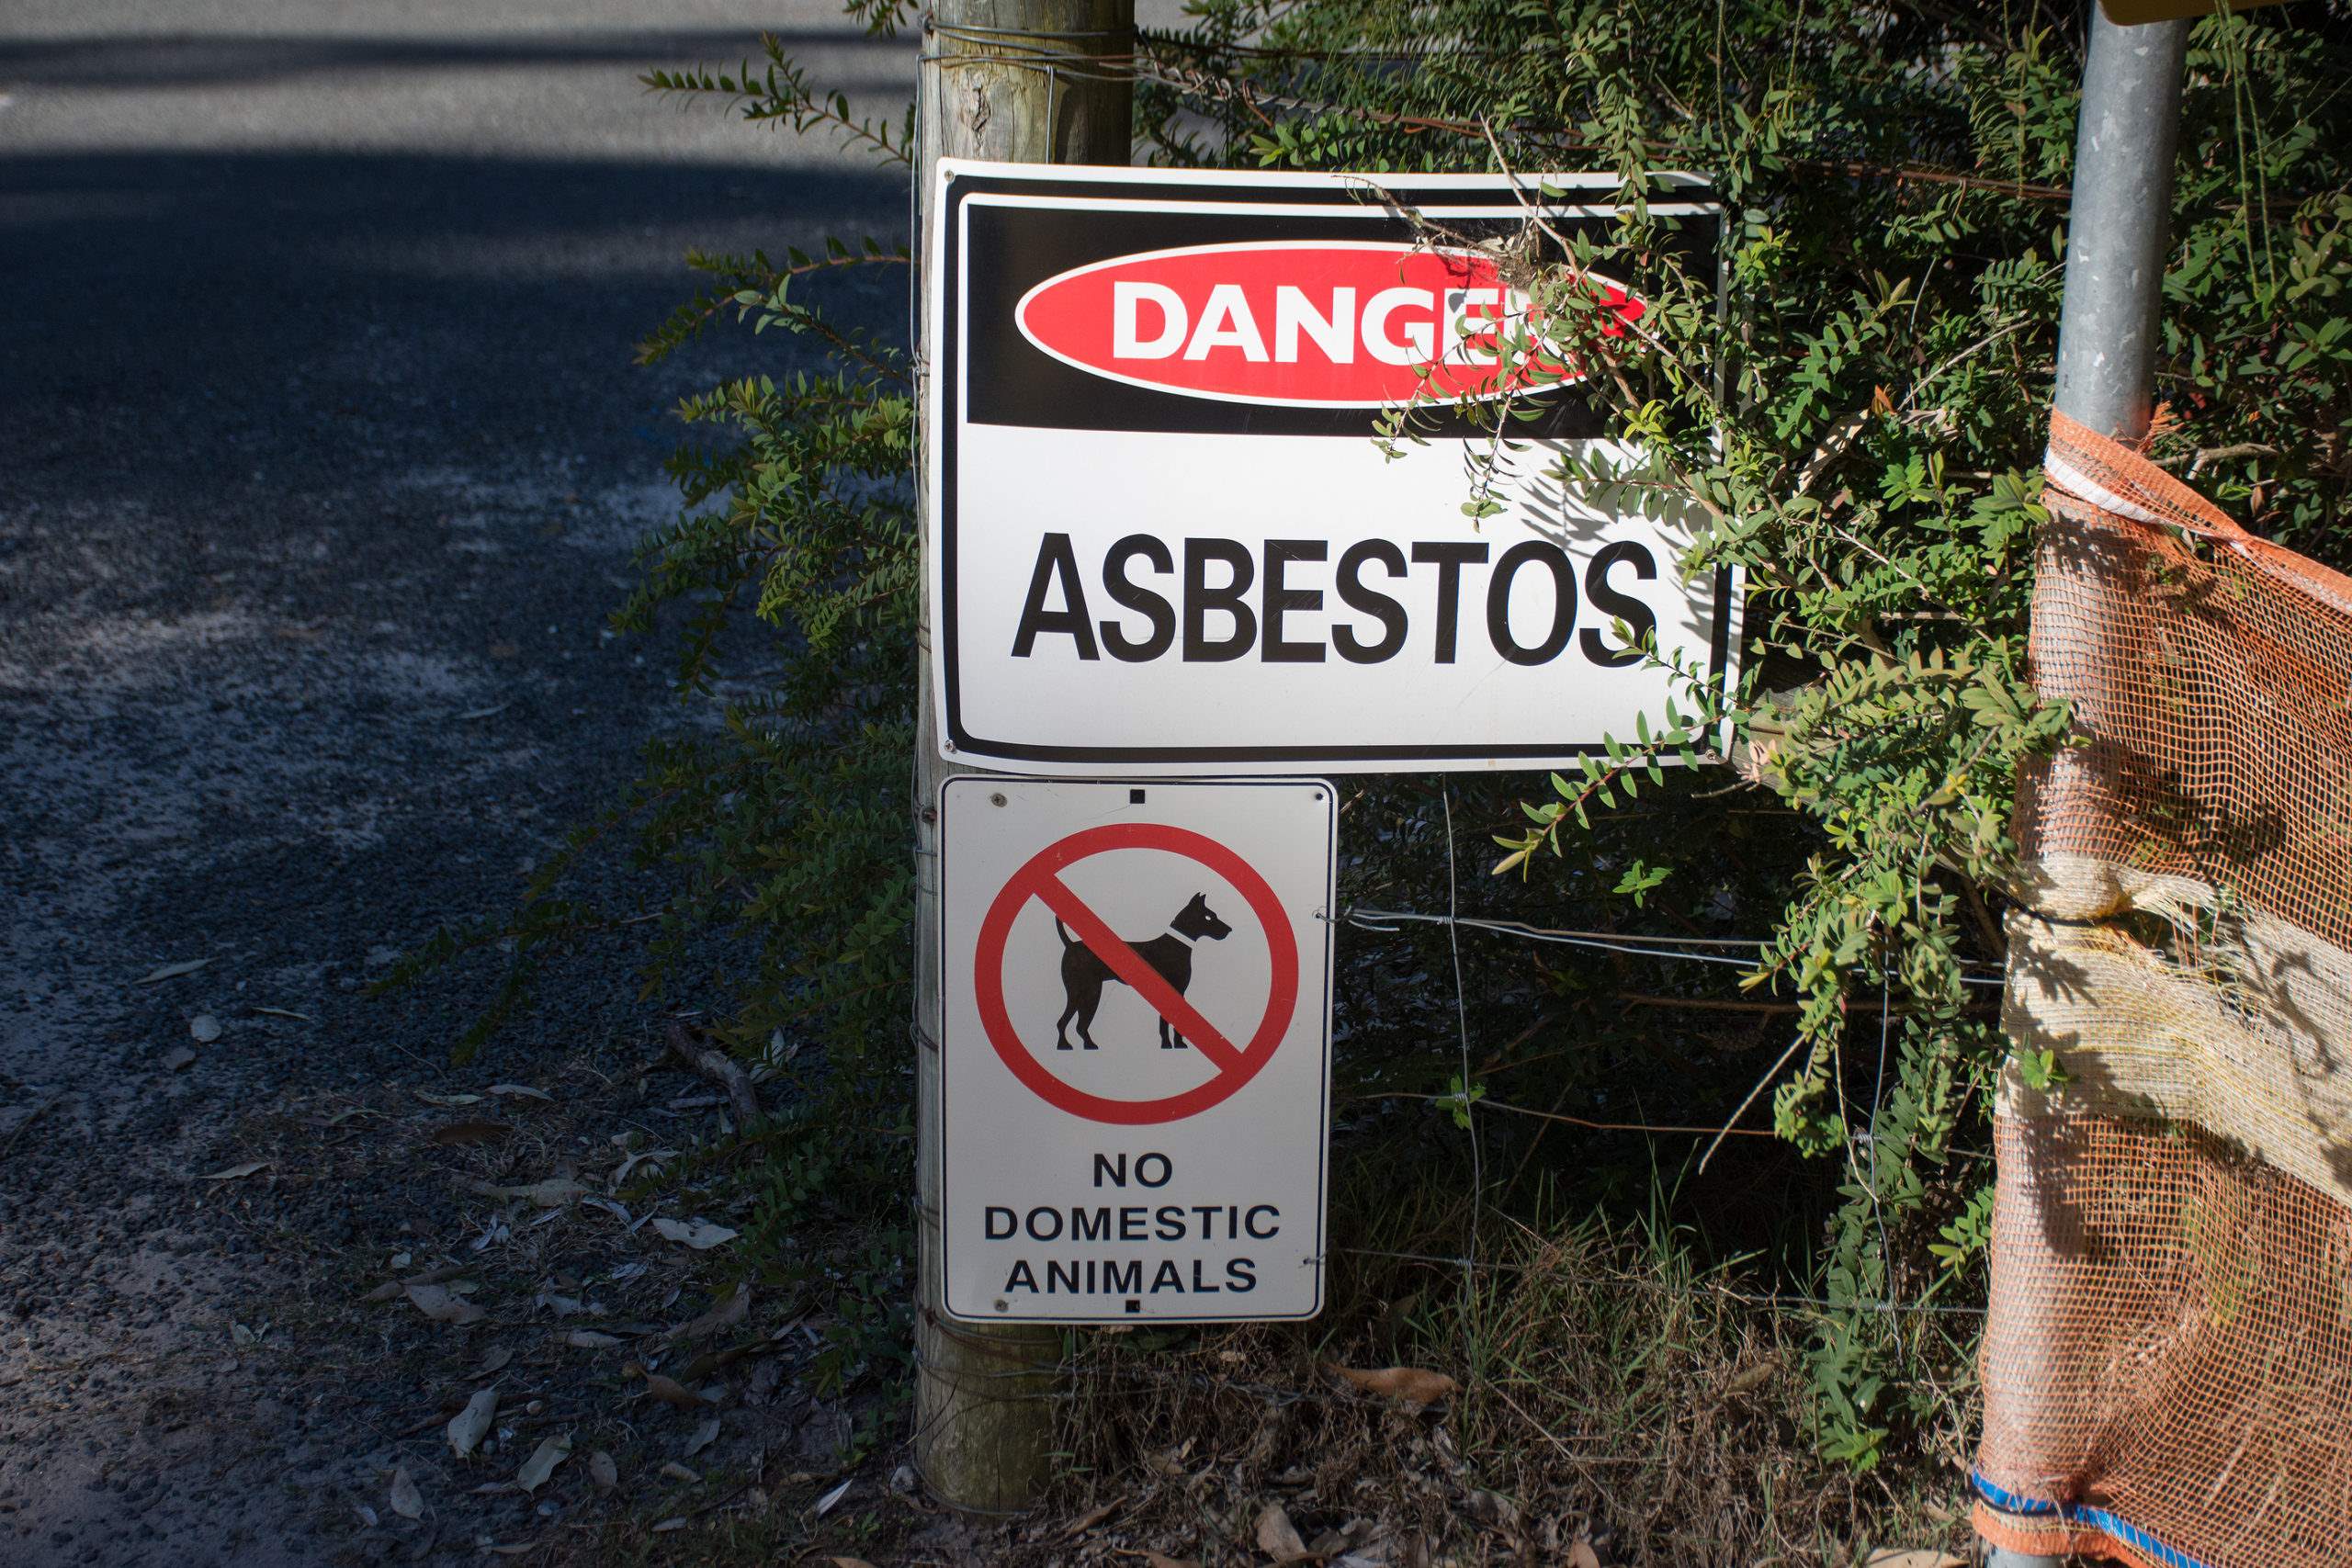 mesothelioma asbestos cancer exposure occupations lawsuit attorney Florida